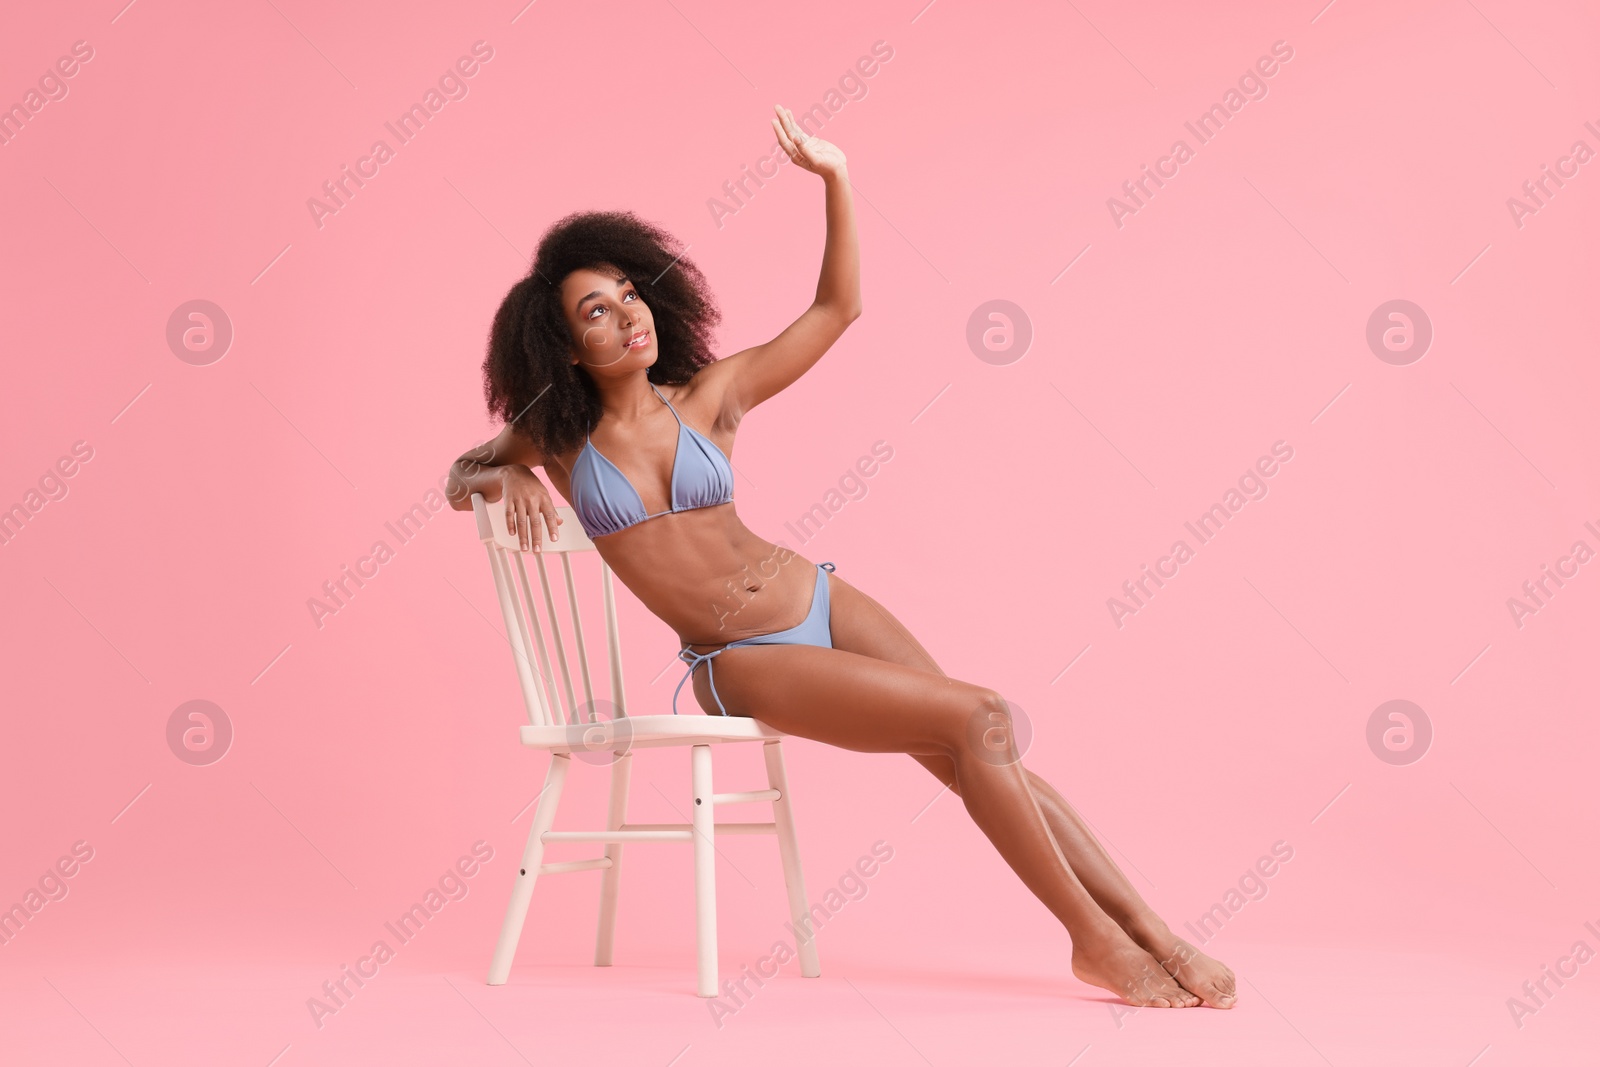 Photo of Beautiful woman in stylish bikini posing on chair against pink background